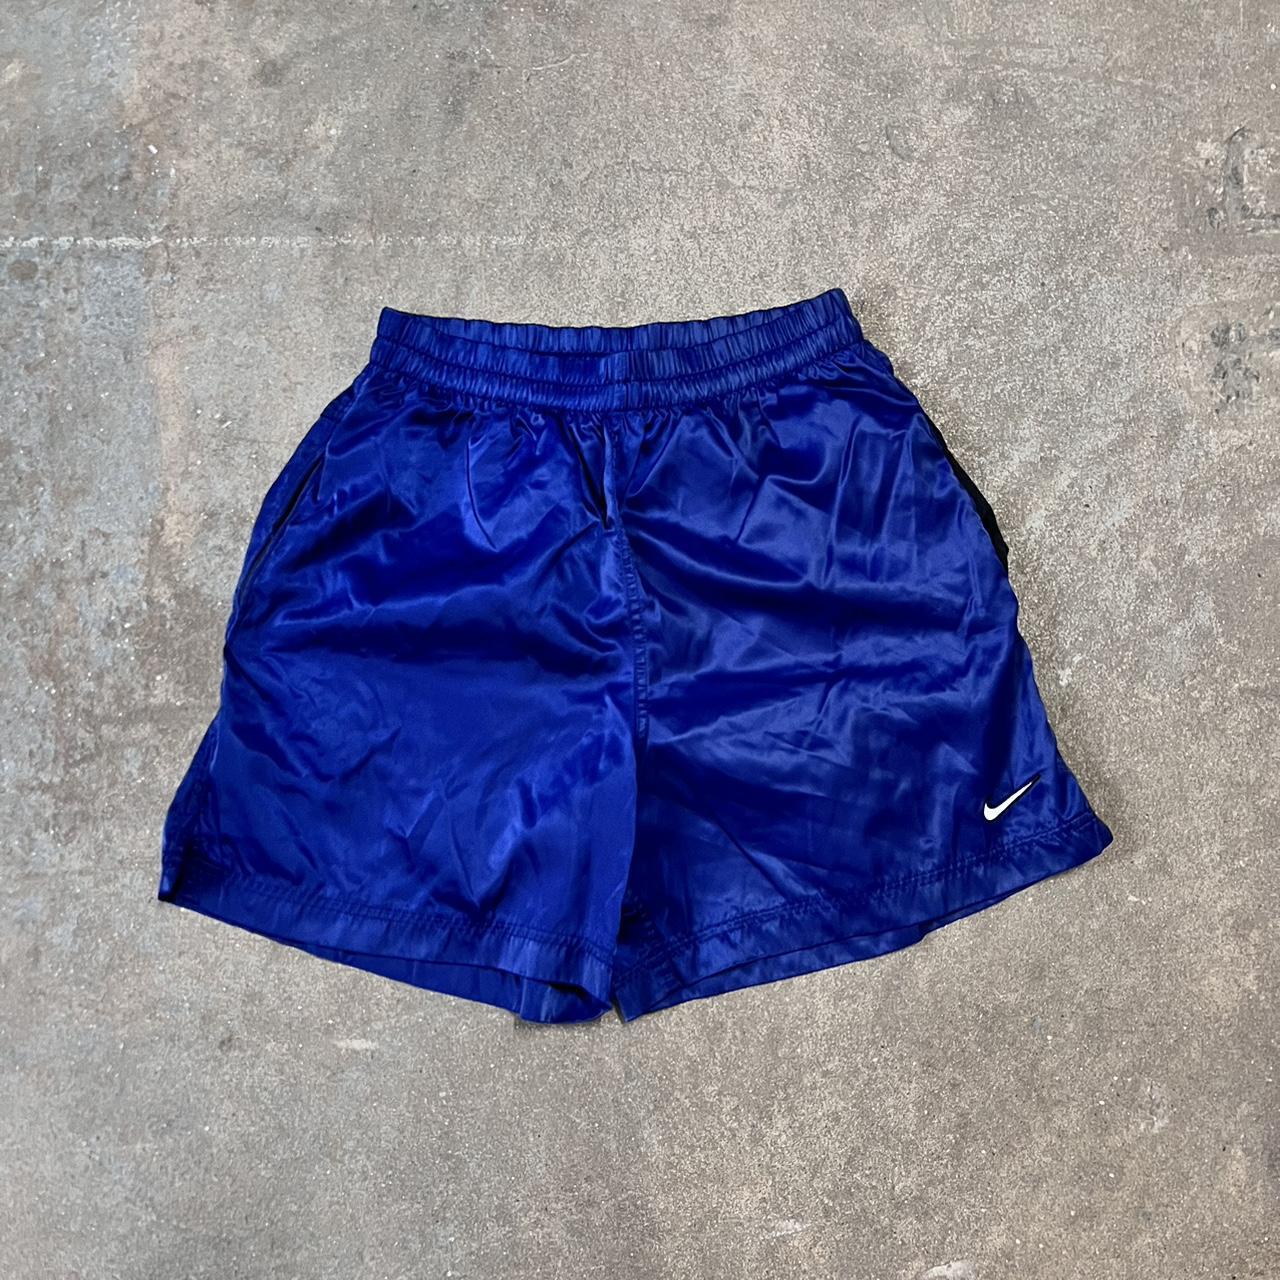 Nike Men's Blue and White Shorts | Depop